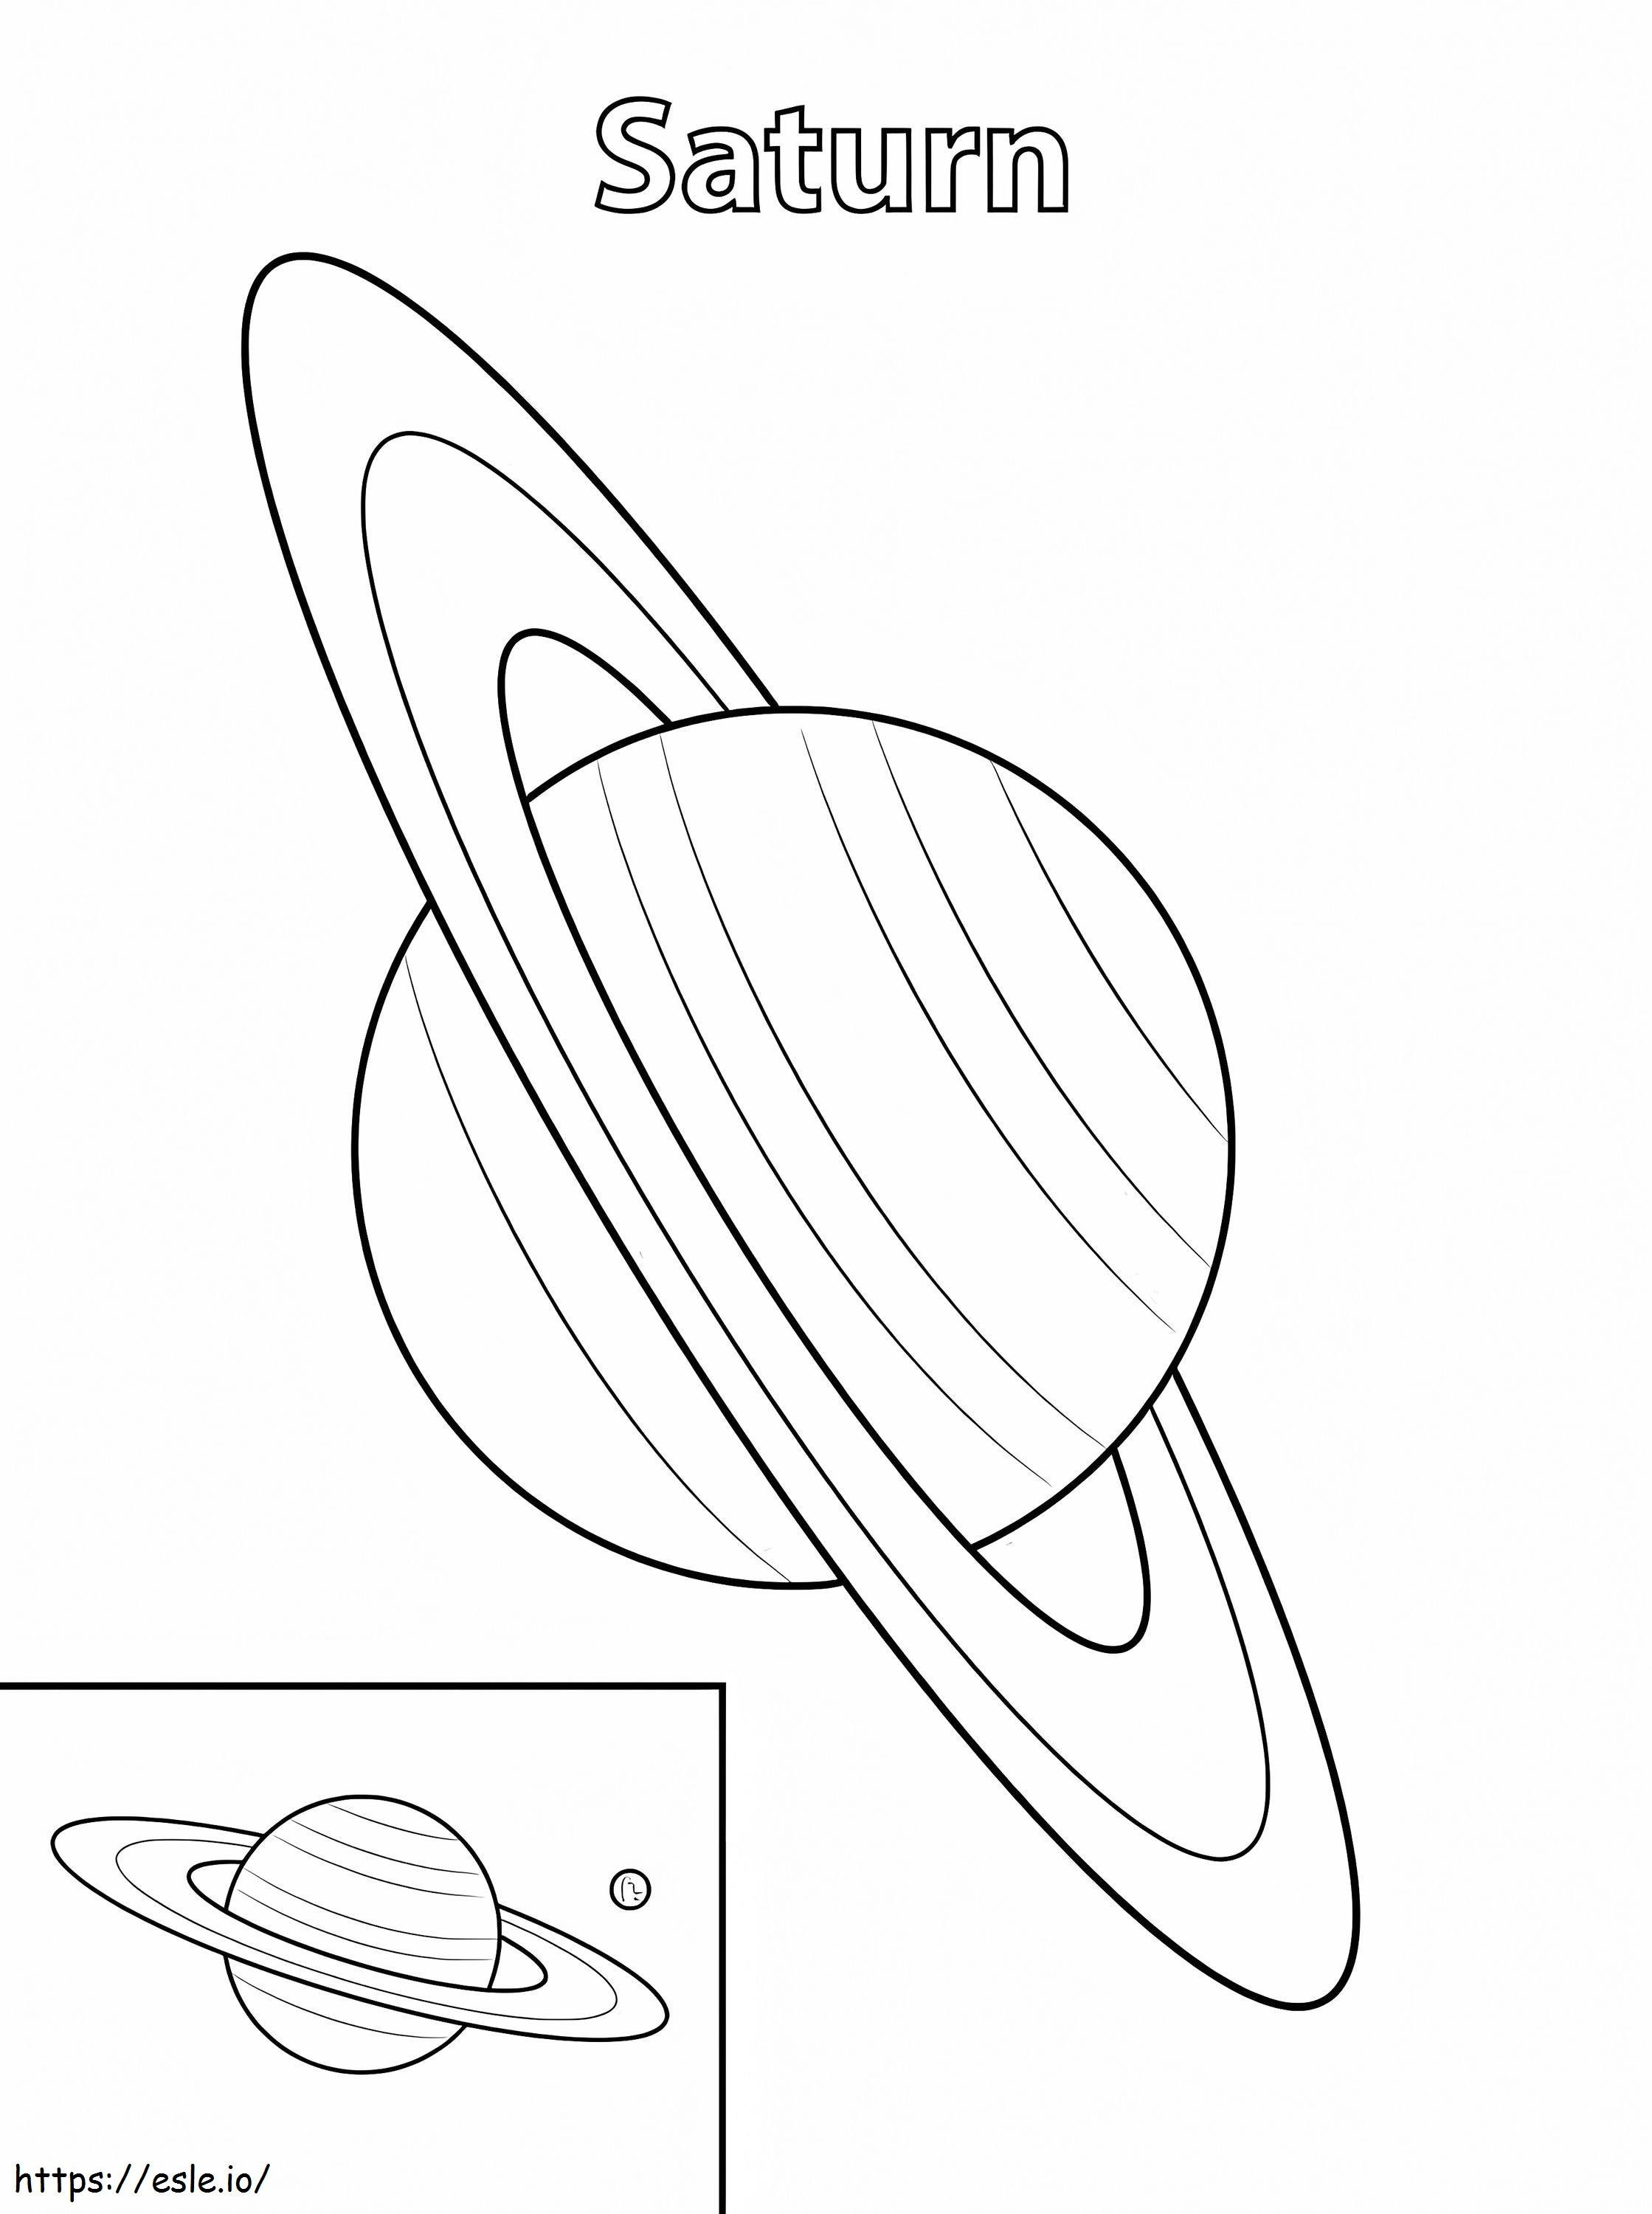 Planeta Saturno para colorir